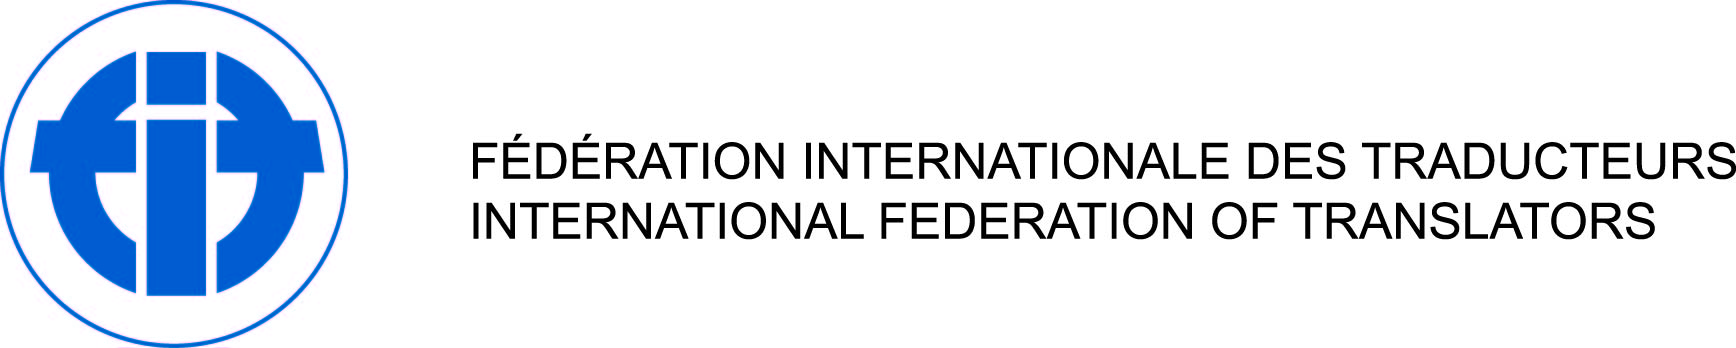 Fédération internationale des traducteurs International Federation of Translators